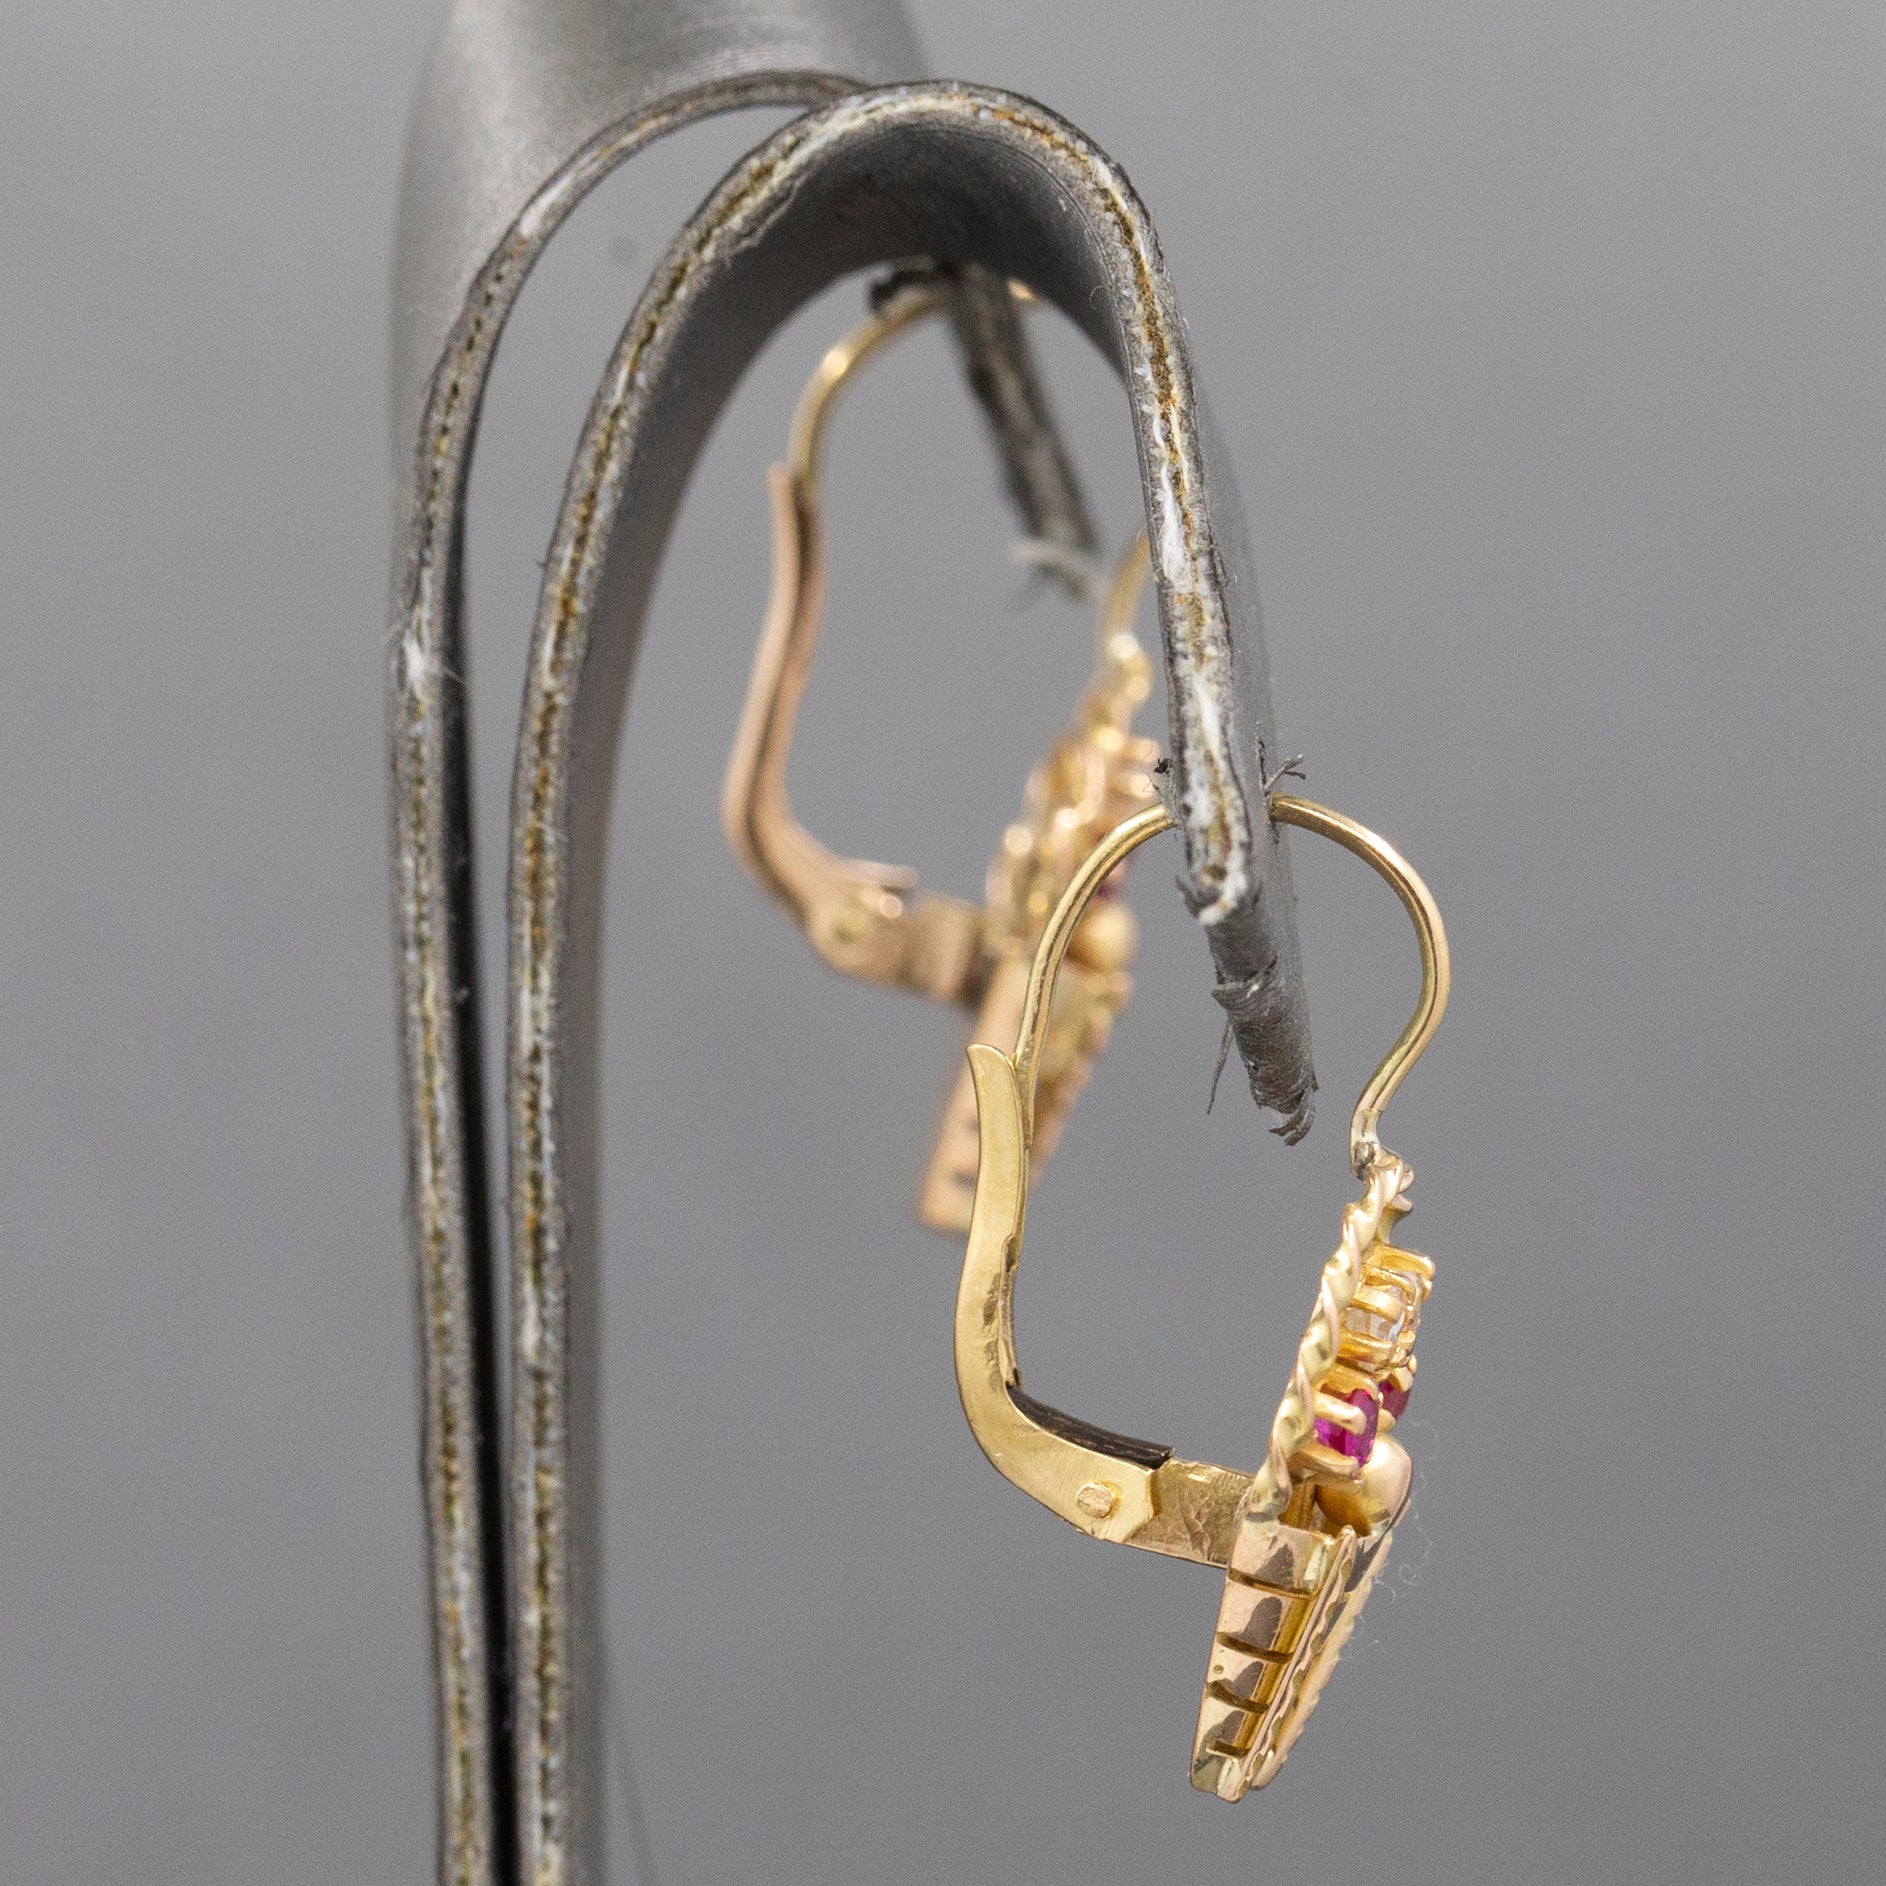 Late Art Deco Ruby and Diamond Flower Basket Earrings in 14k Yellow Gold